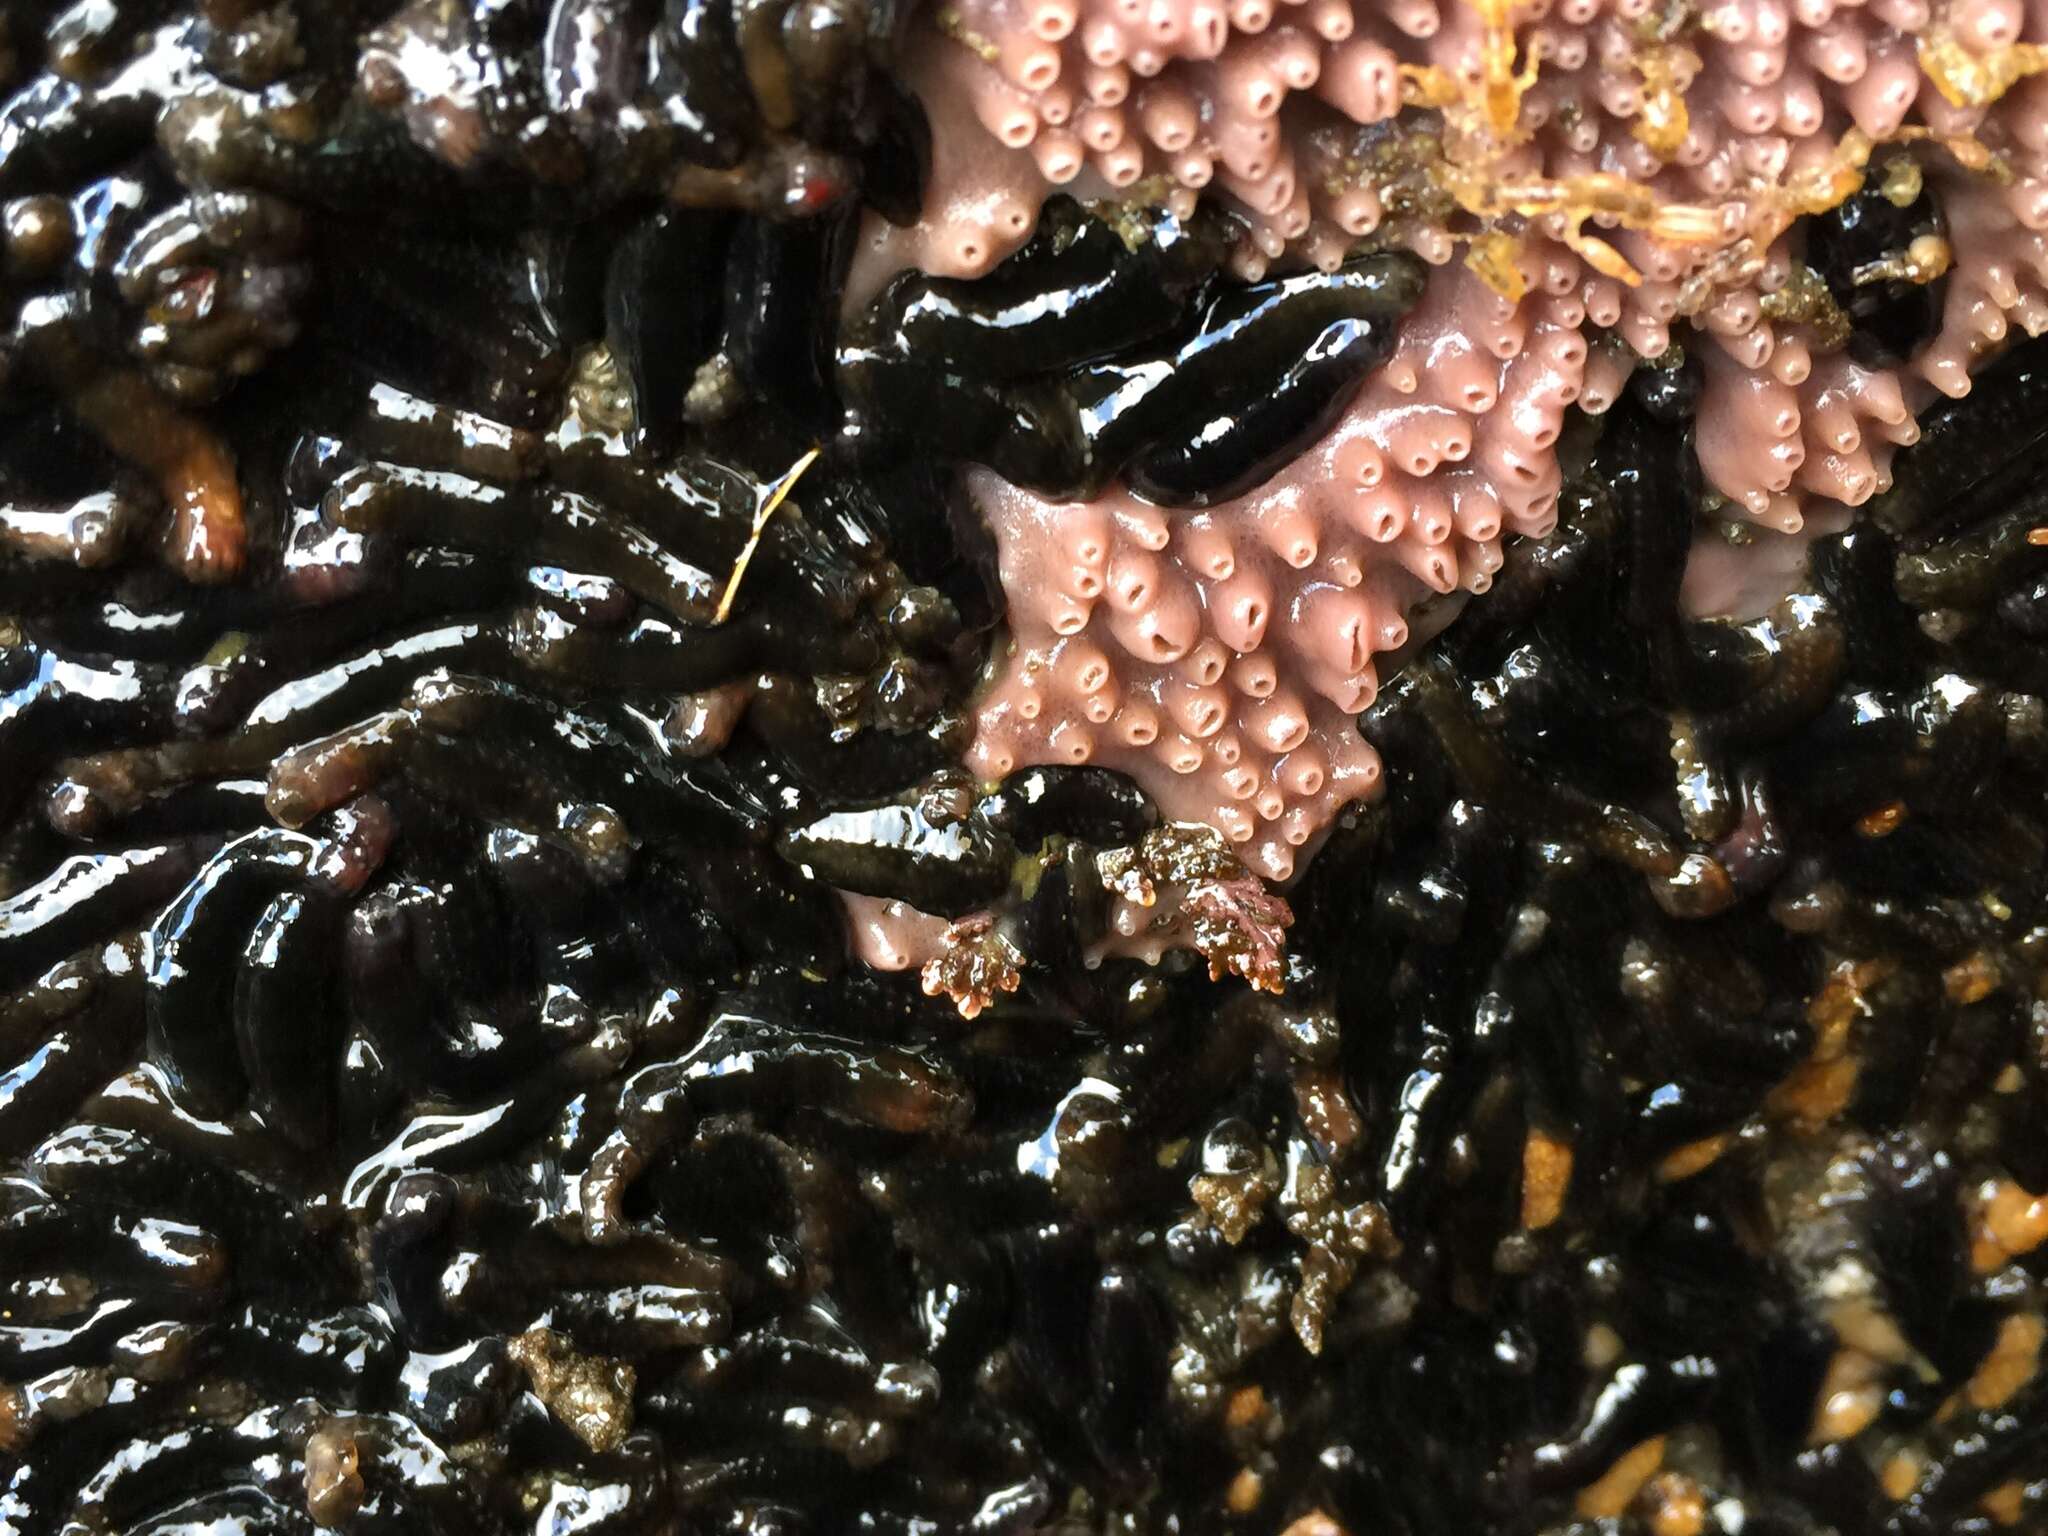 Image of tar spot sea cucumber